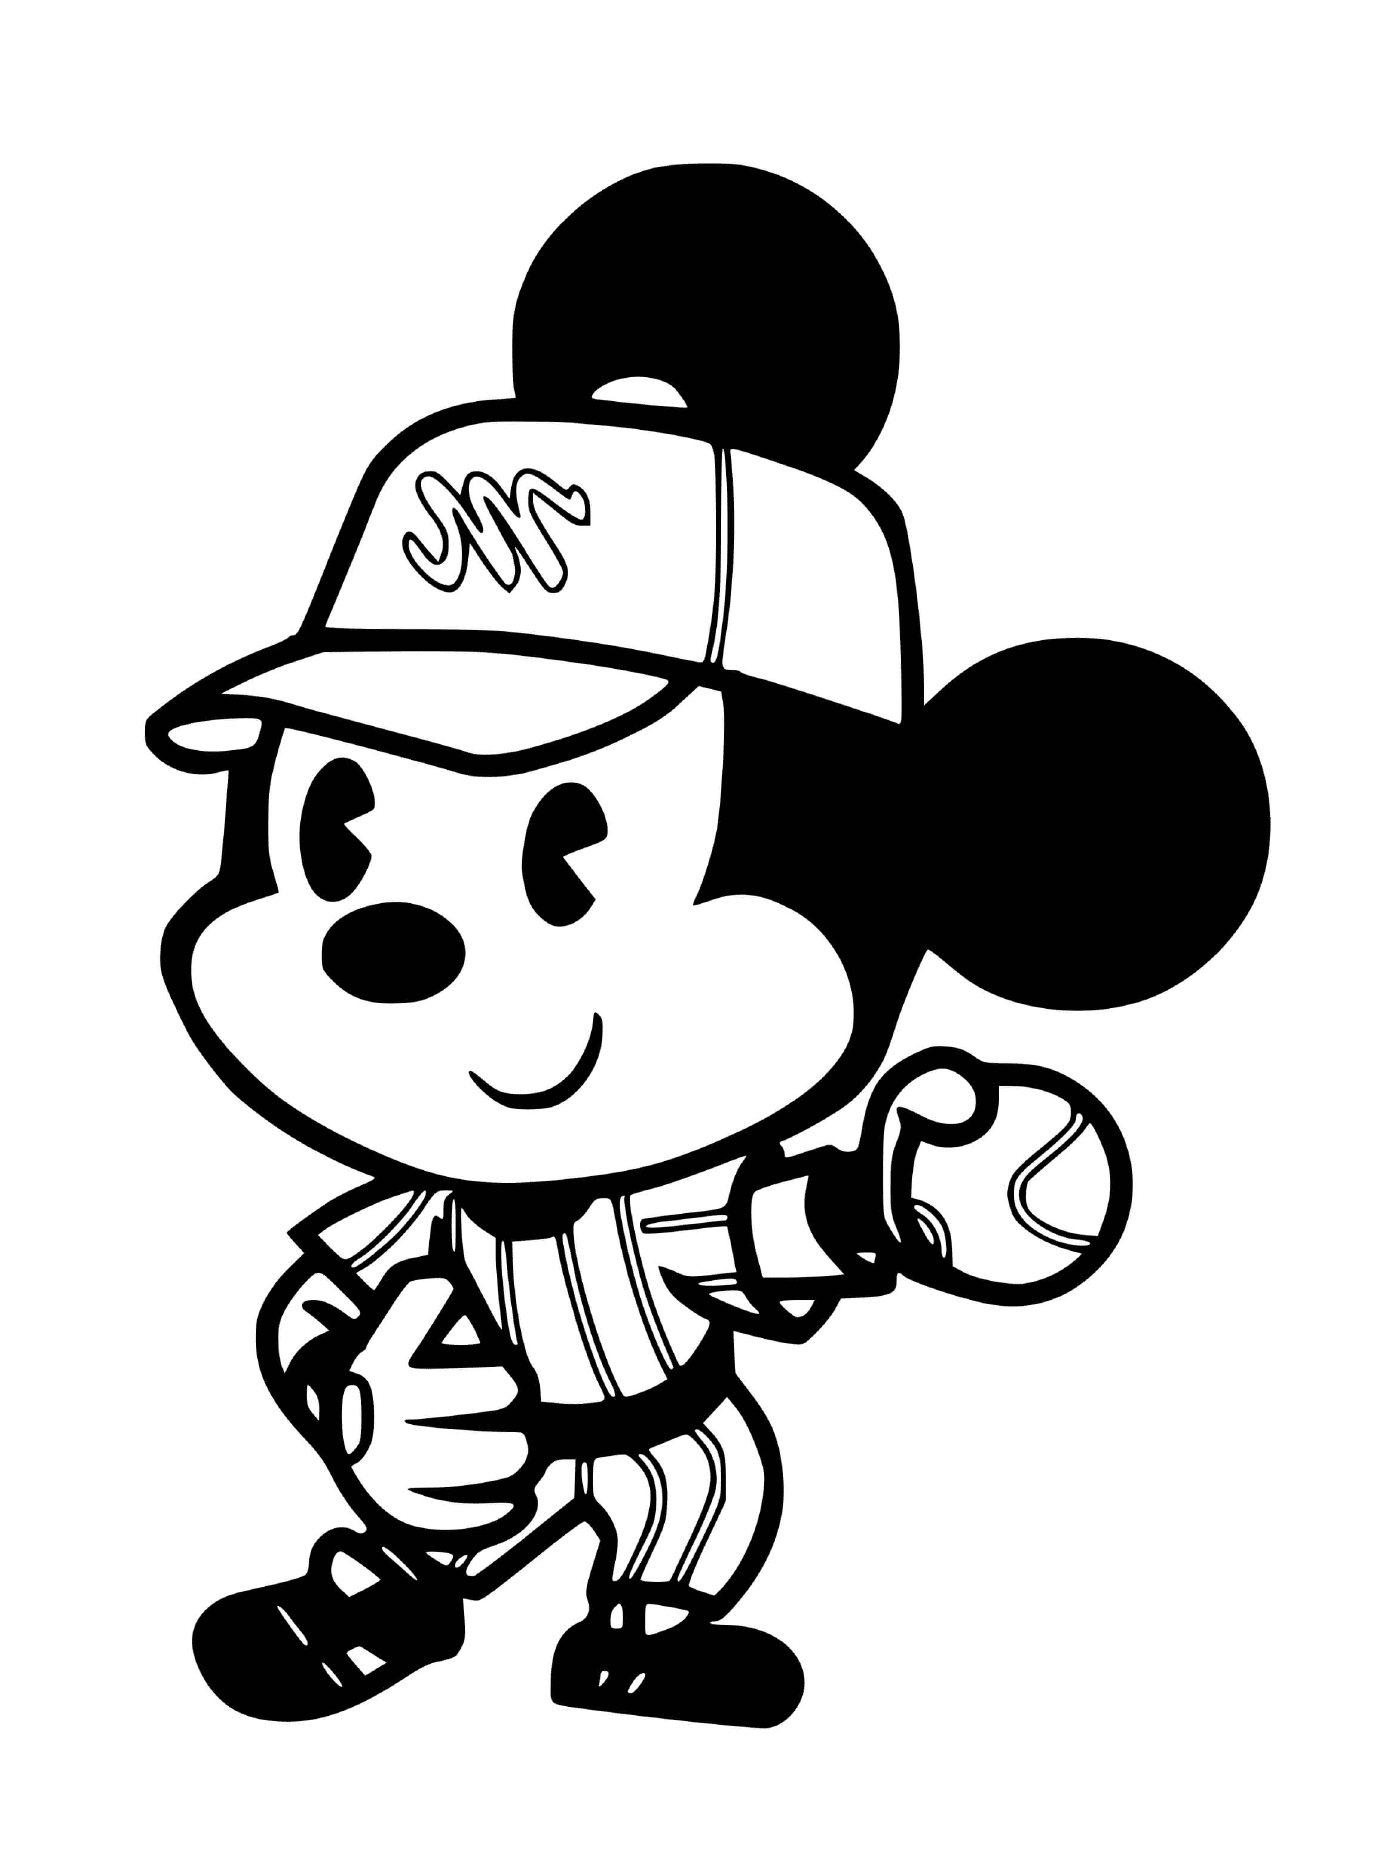  Mickey Mouse plays baseball 